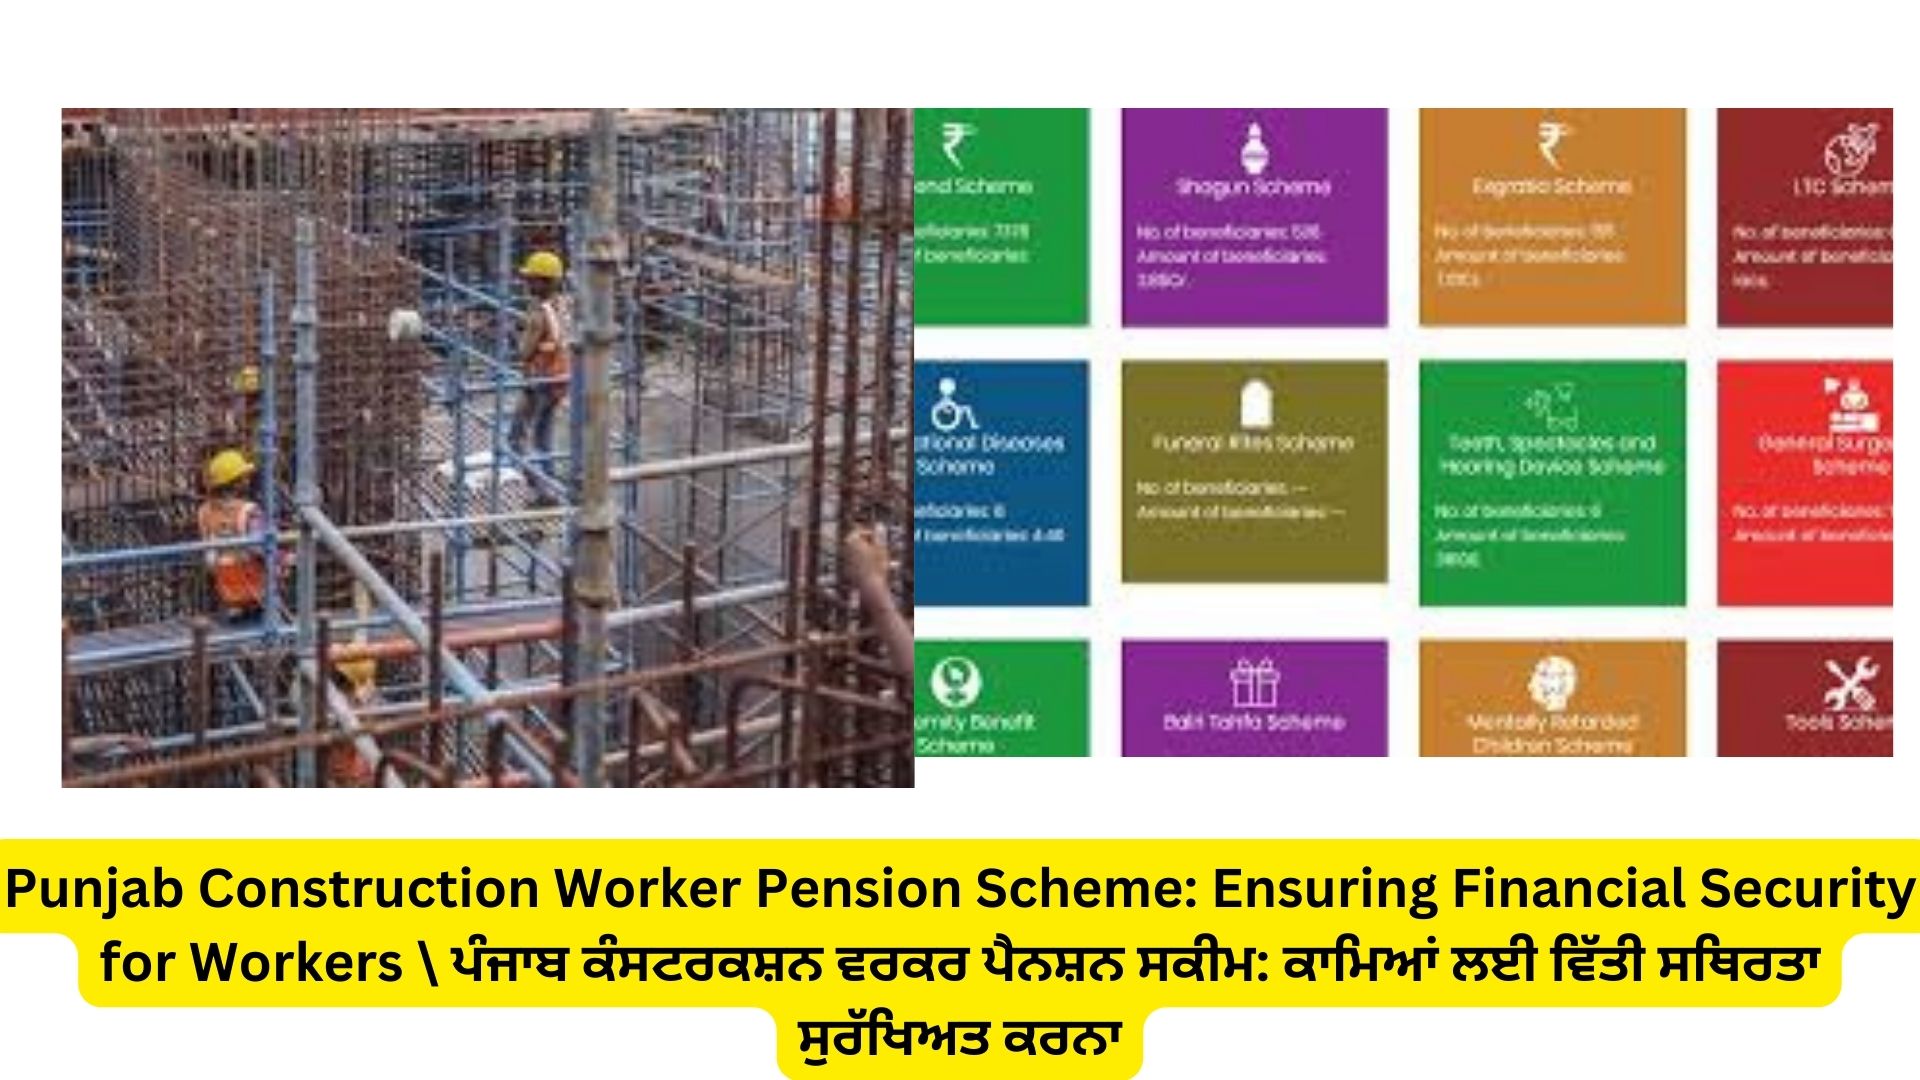 Punjab Construction Worker Pension Scheme: Ensuring Financial Security for Workers \ ਪੰਜਾਬ ਕੰਸਟਰਕਸ਼ਨ ਵਰਕਰ ਪੈਨਸ਼ਨ ਸਕੀਮ: ਕਾਮਿਆਂ ਲਈ ਵਿੱਤੀ ਸਥਿਰਤਾ ਸੁਰੱਖਿਅਤ ਕਰਨਾ